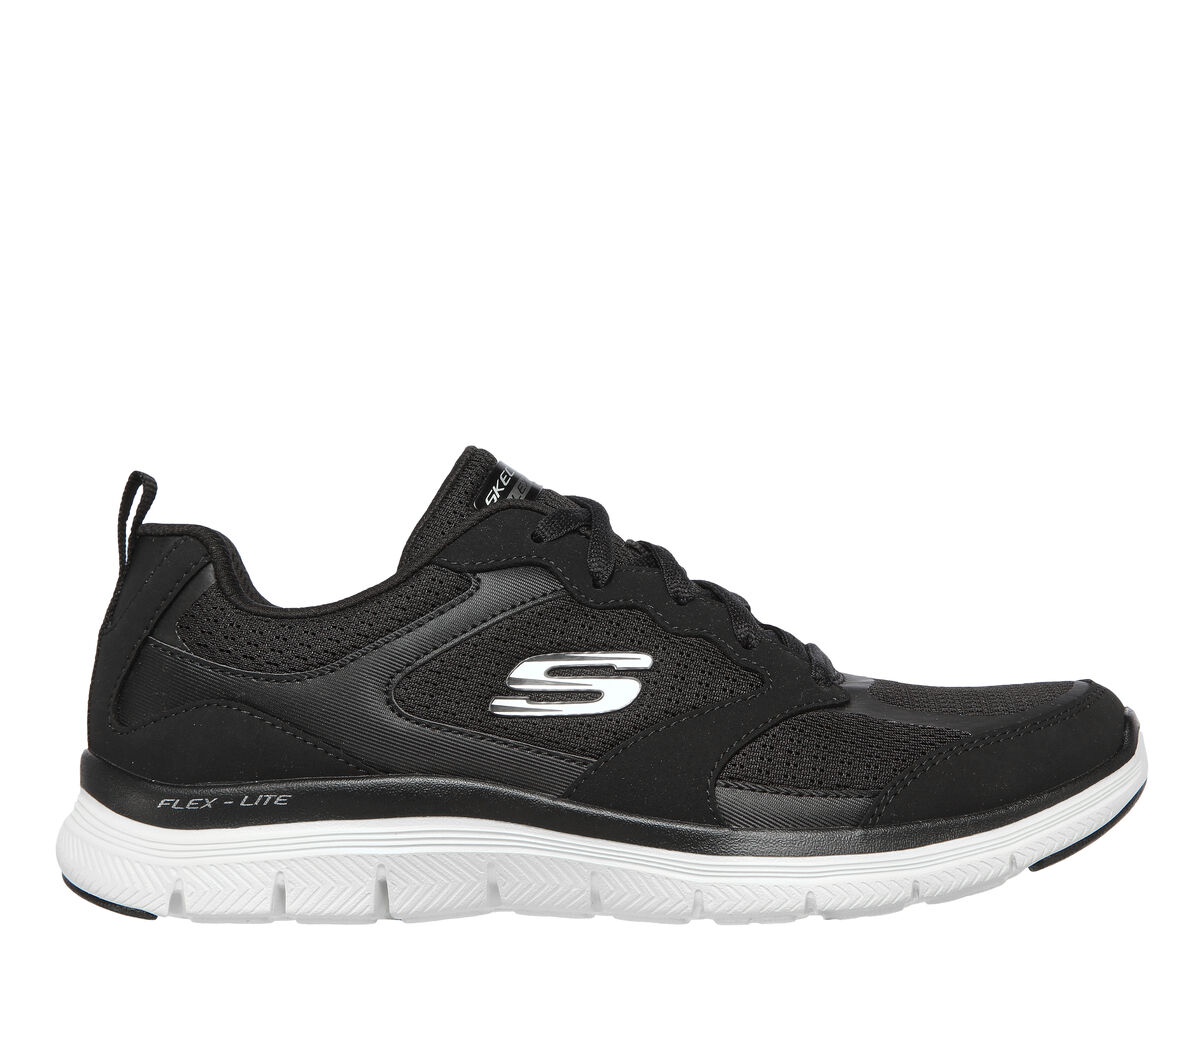 Skechers Flex Appeal Sweet Spot black white sneakers size US 7 NEW in box  NIB - $57 (20% Off Retail) - From J